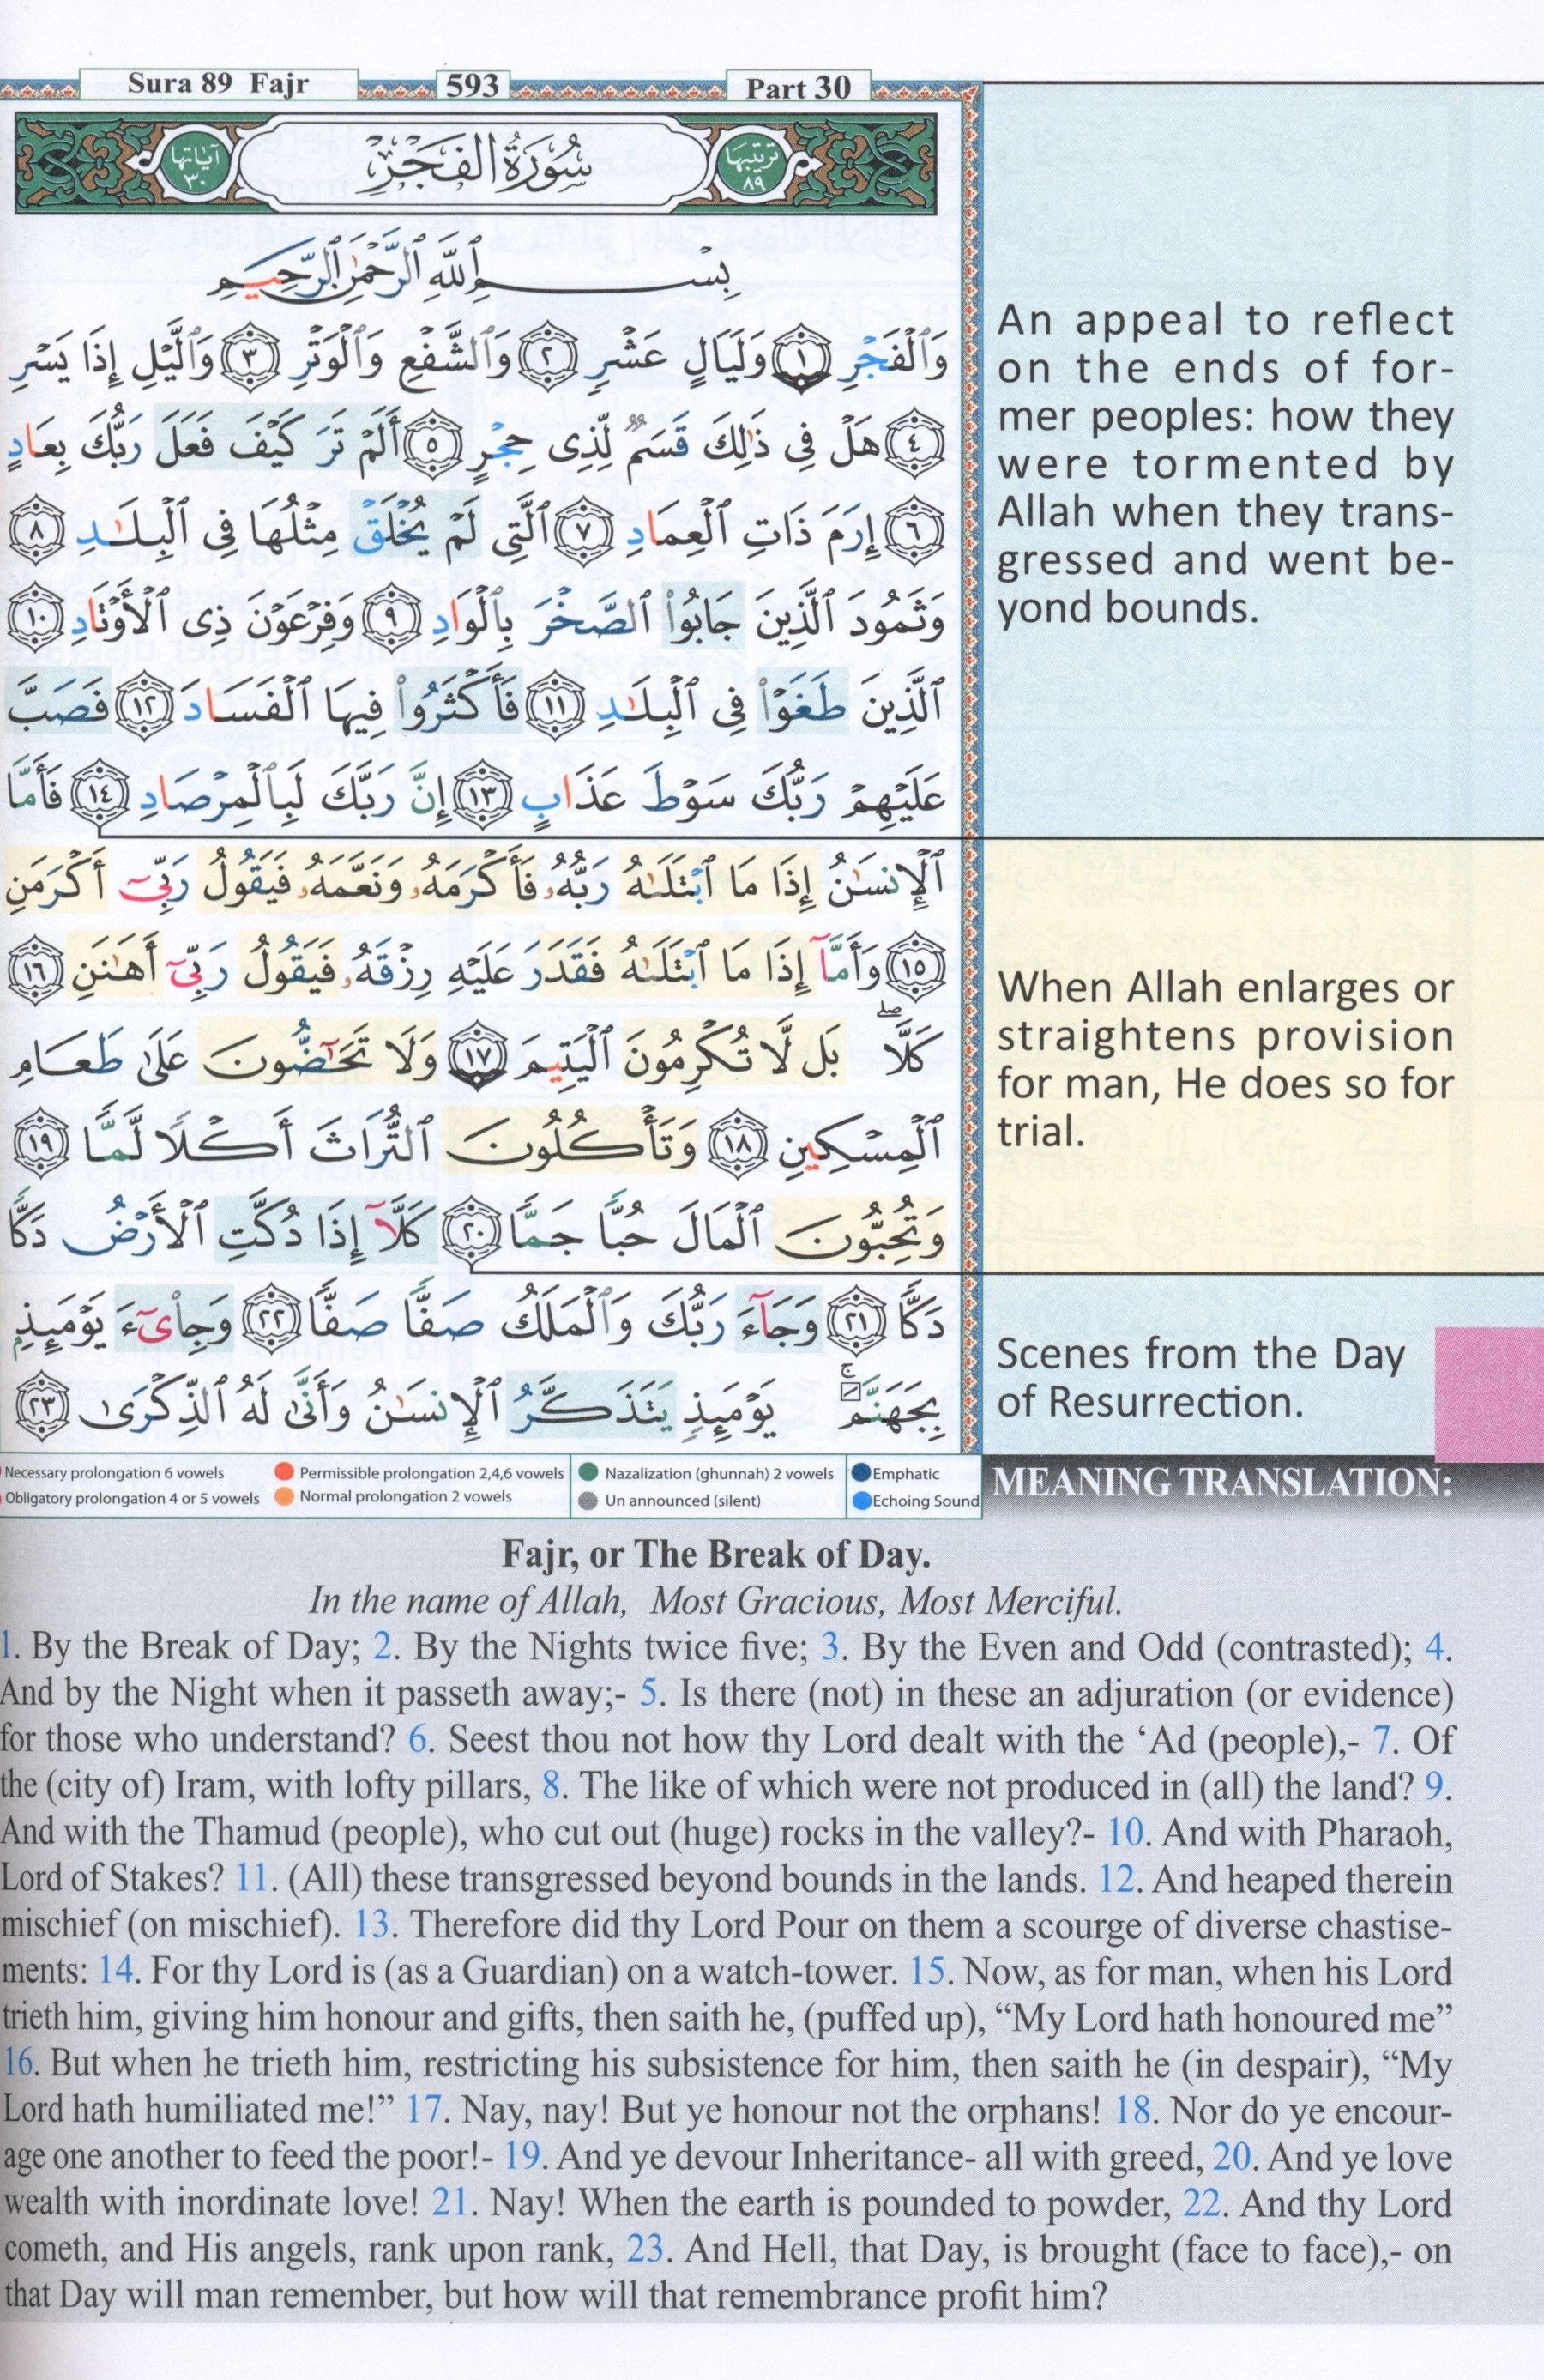 Qur'an Tajweed & Memorizing (Abbreviations to facilitate understanding & memorizing the Qur'an)